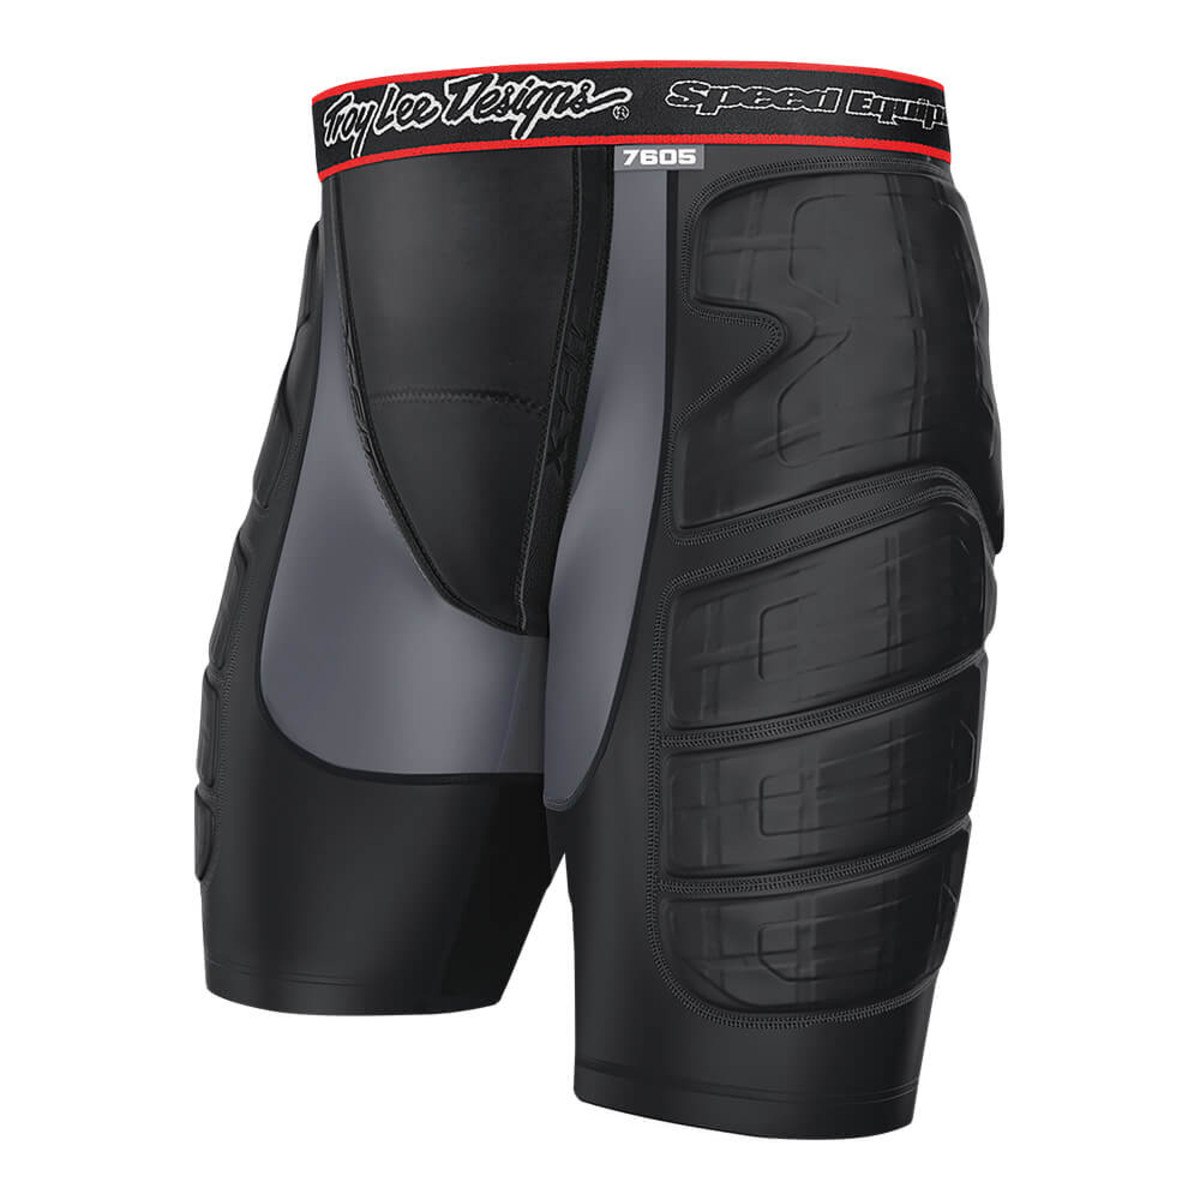 Foto van Troy Lee Designs LPS 7605 Lower Protection Shorts - Black